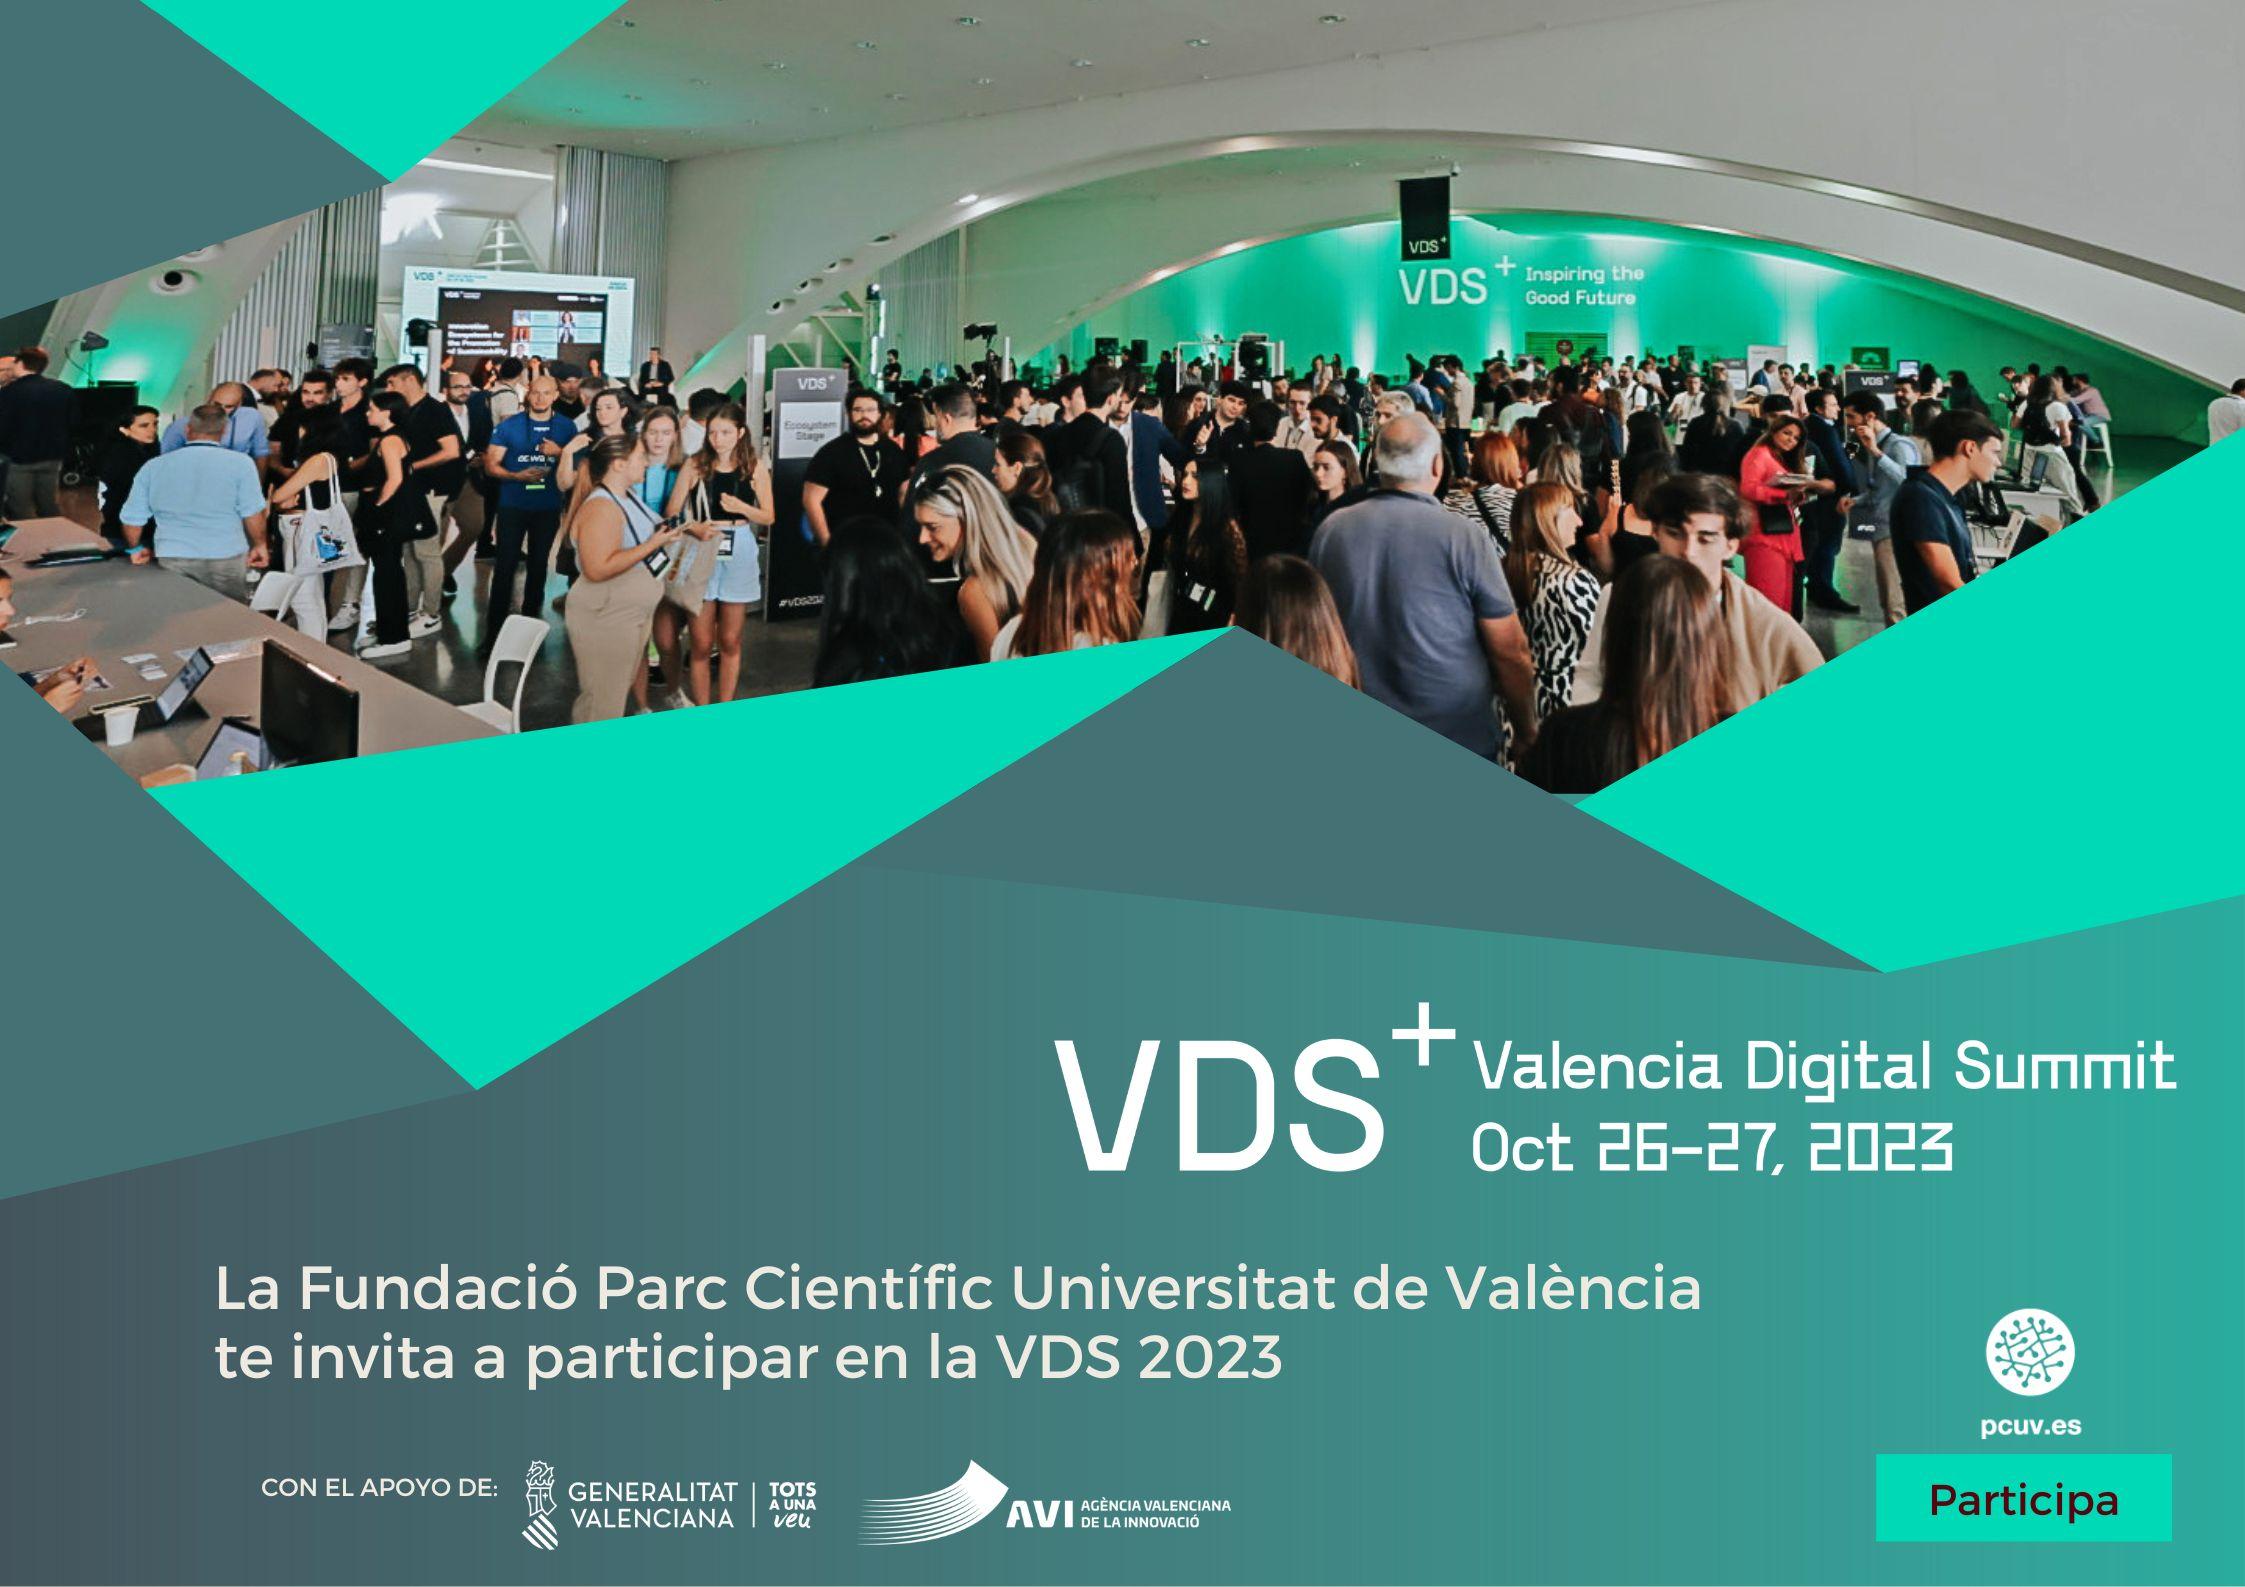 El Parc Científic de la Universitat de València te invita a participar en la VALENCIA DIGITAL SUMMIT 2023